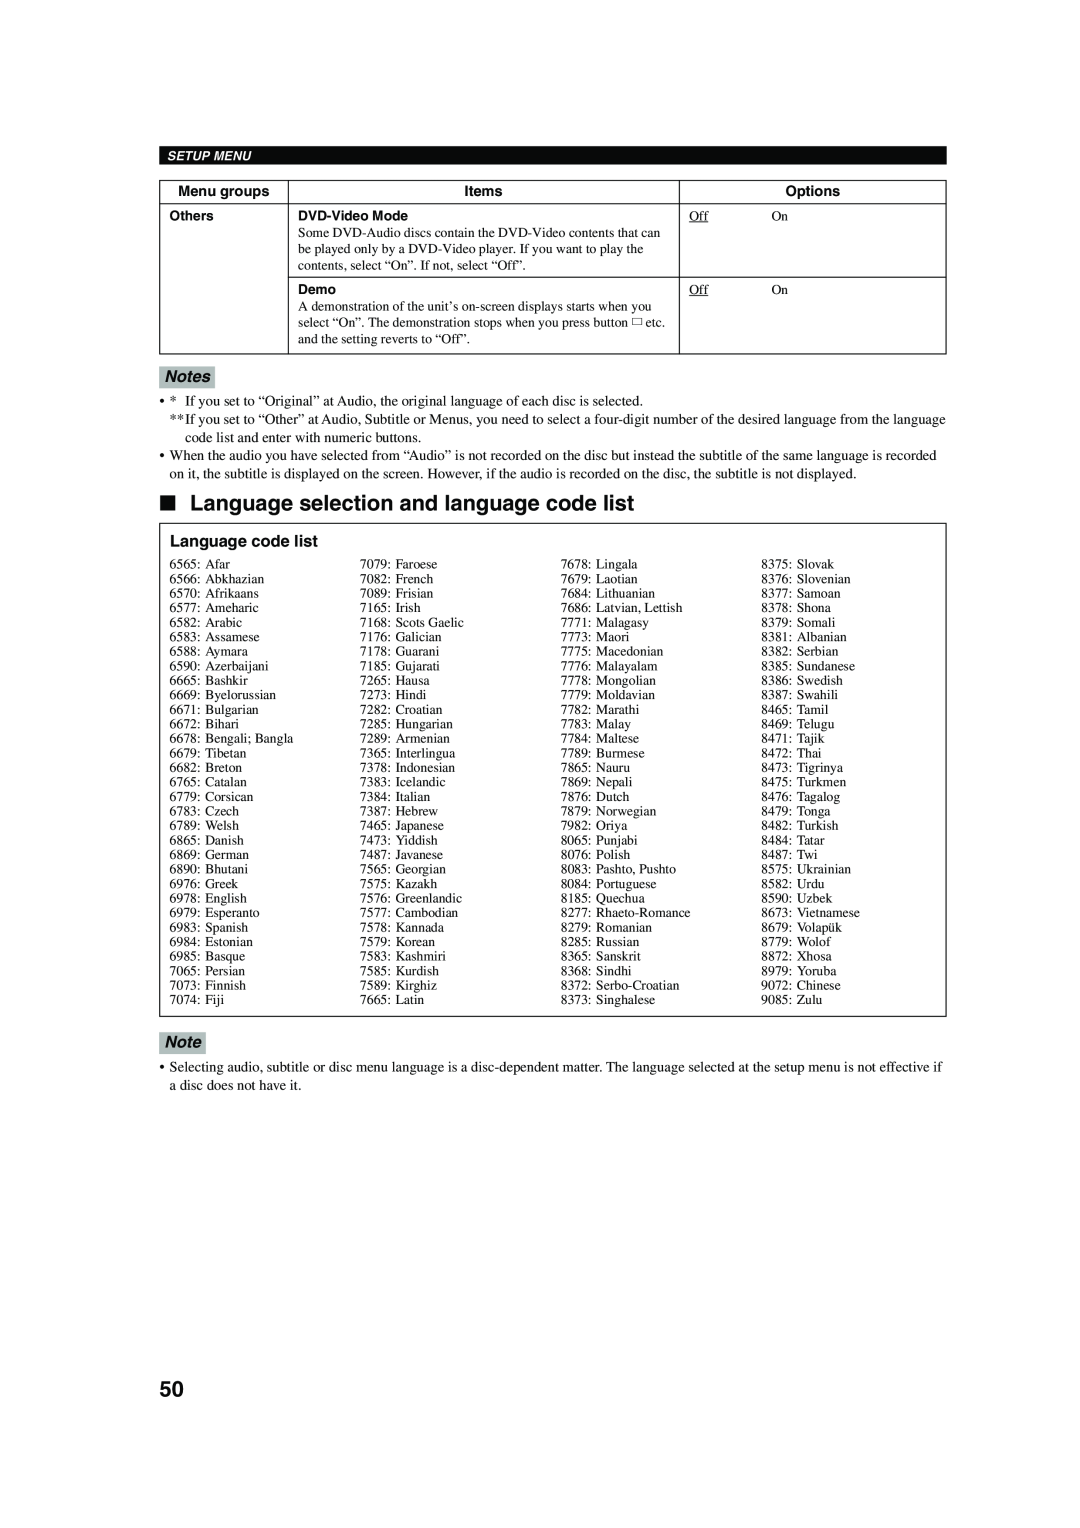 Yamaha DVX-S100 owner manual Language selection and language code list, Language code list 